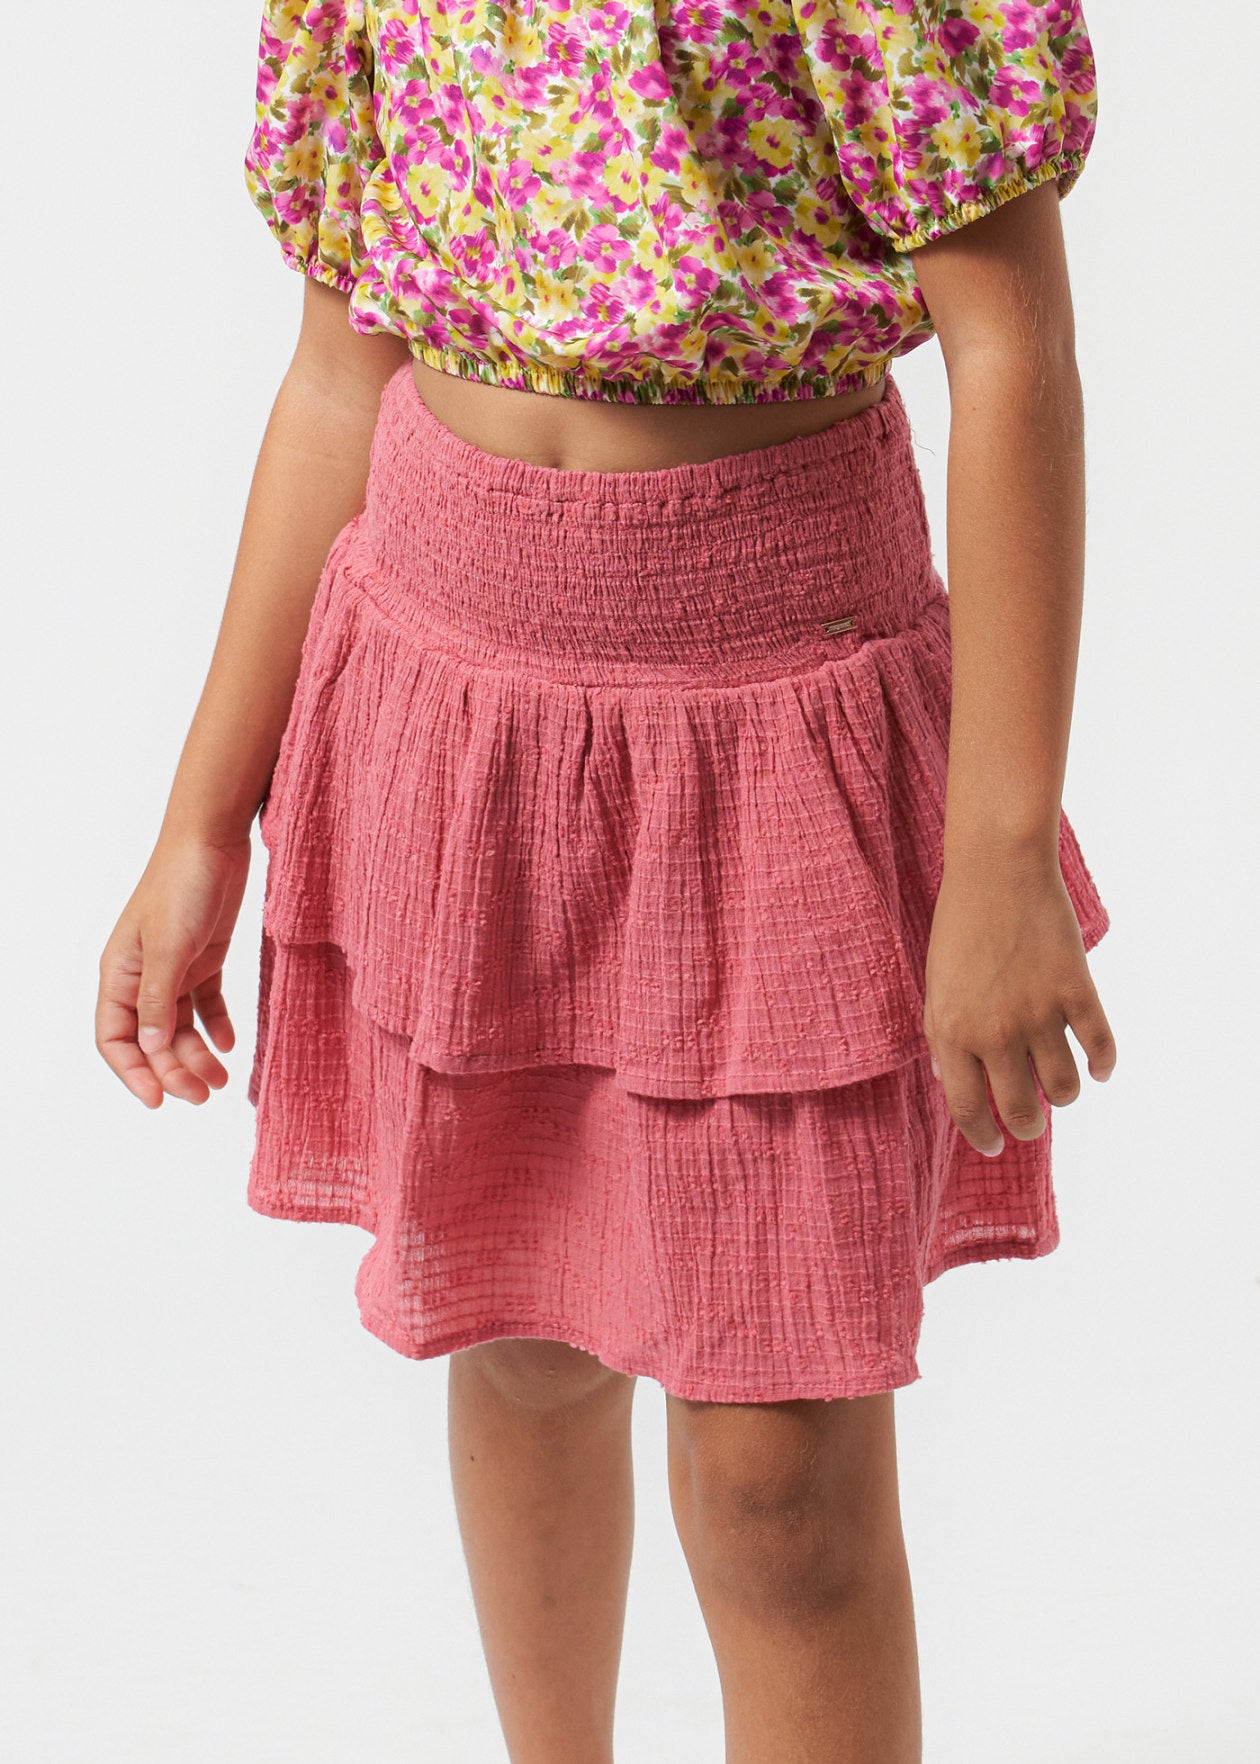 Blush Color Frill Skirt